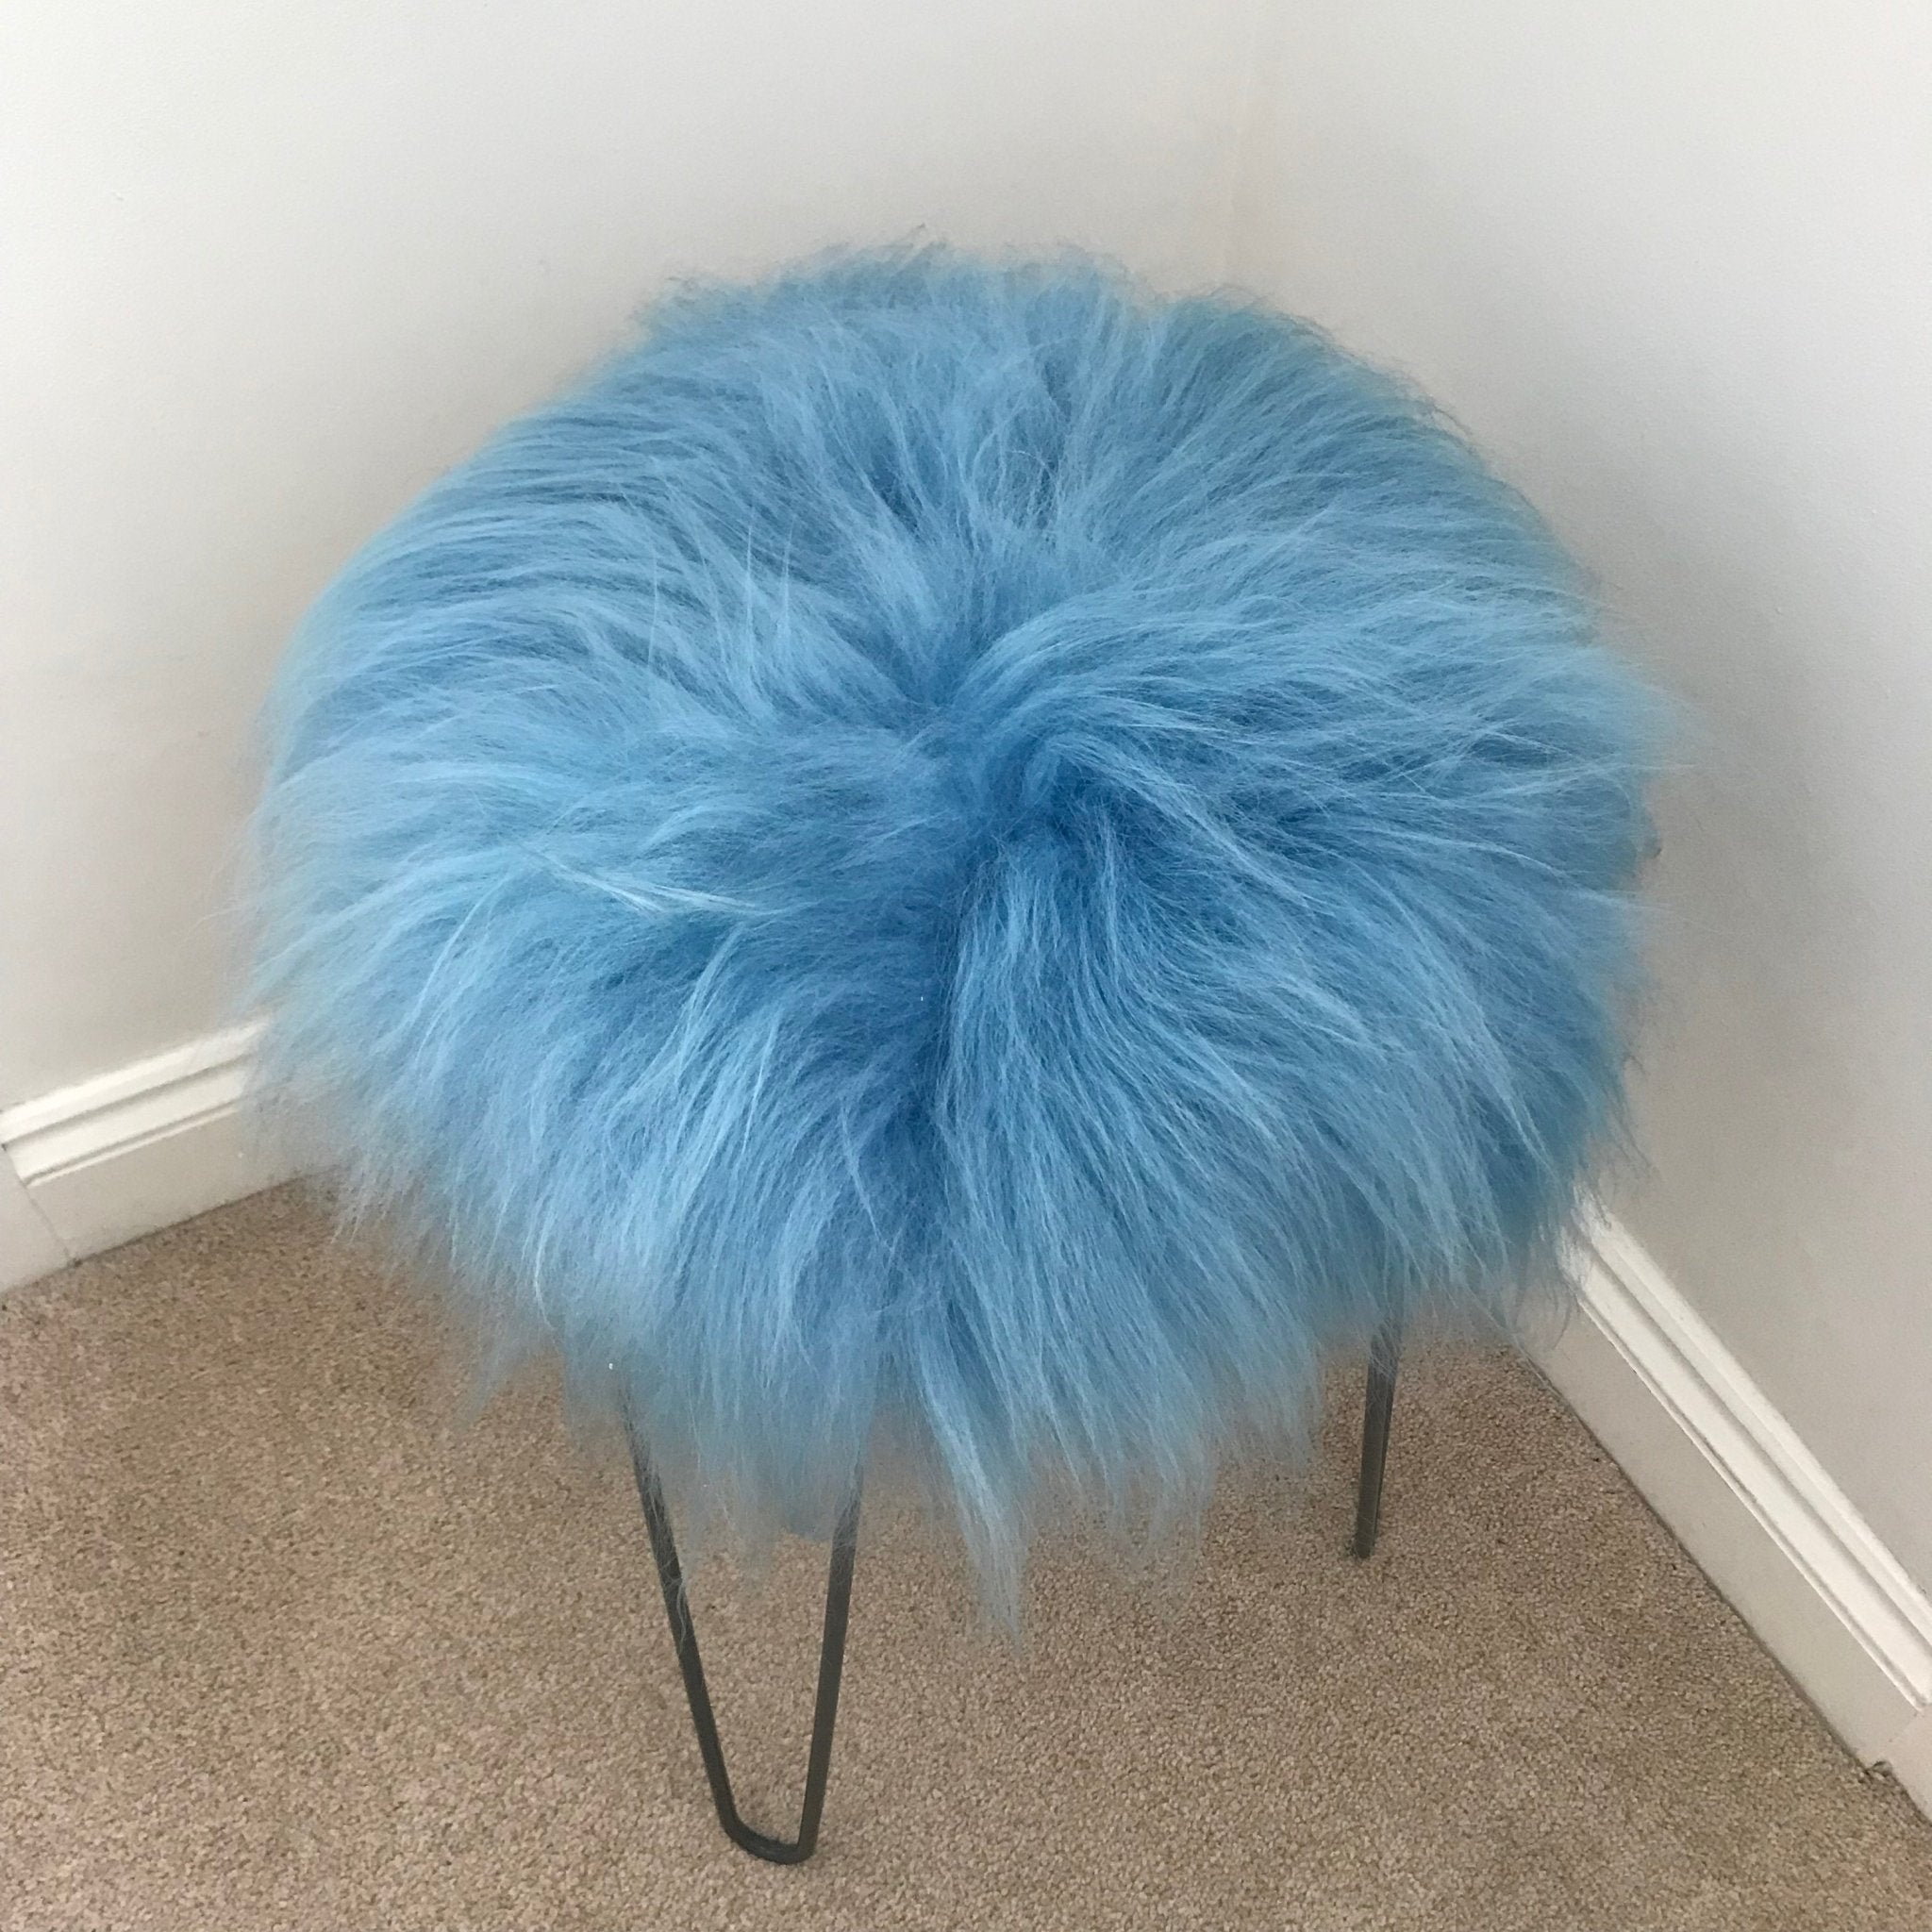 Icelandic Sheepskin Roundie Seat Cover Duck Egg Blue Long 35cm - Wildash London